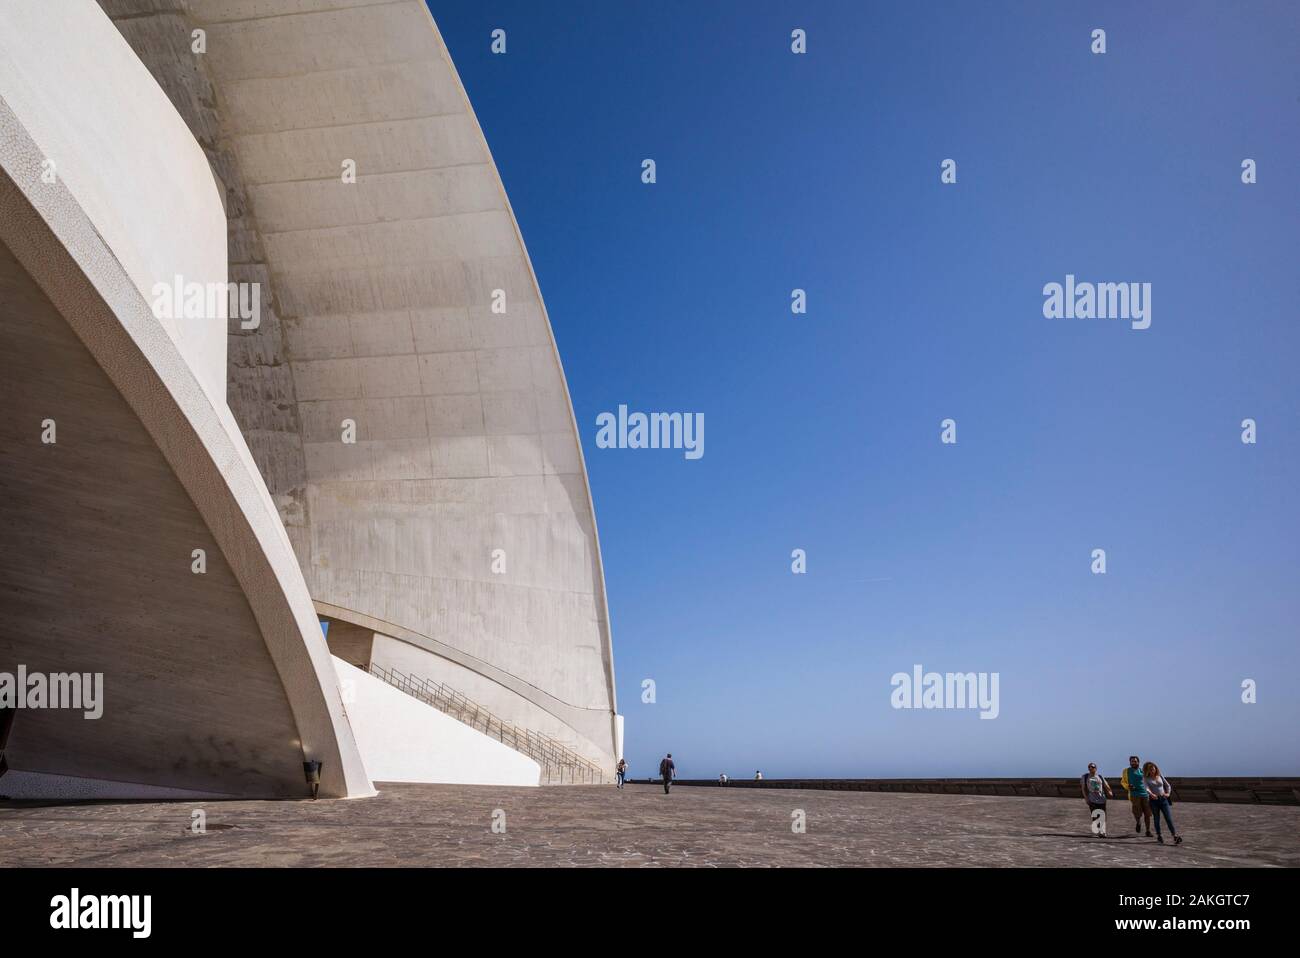 Spanien, Kanarische Inseln, Teneriffa, Santa Cruz de Tenerife, Auditoio de Tenerife Auditorium, entworfen von Architekt Santiago Calatrava. Stockfoto